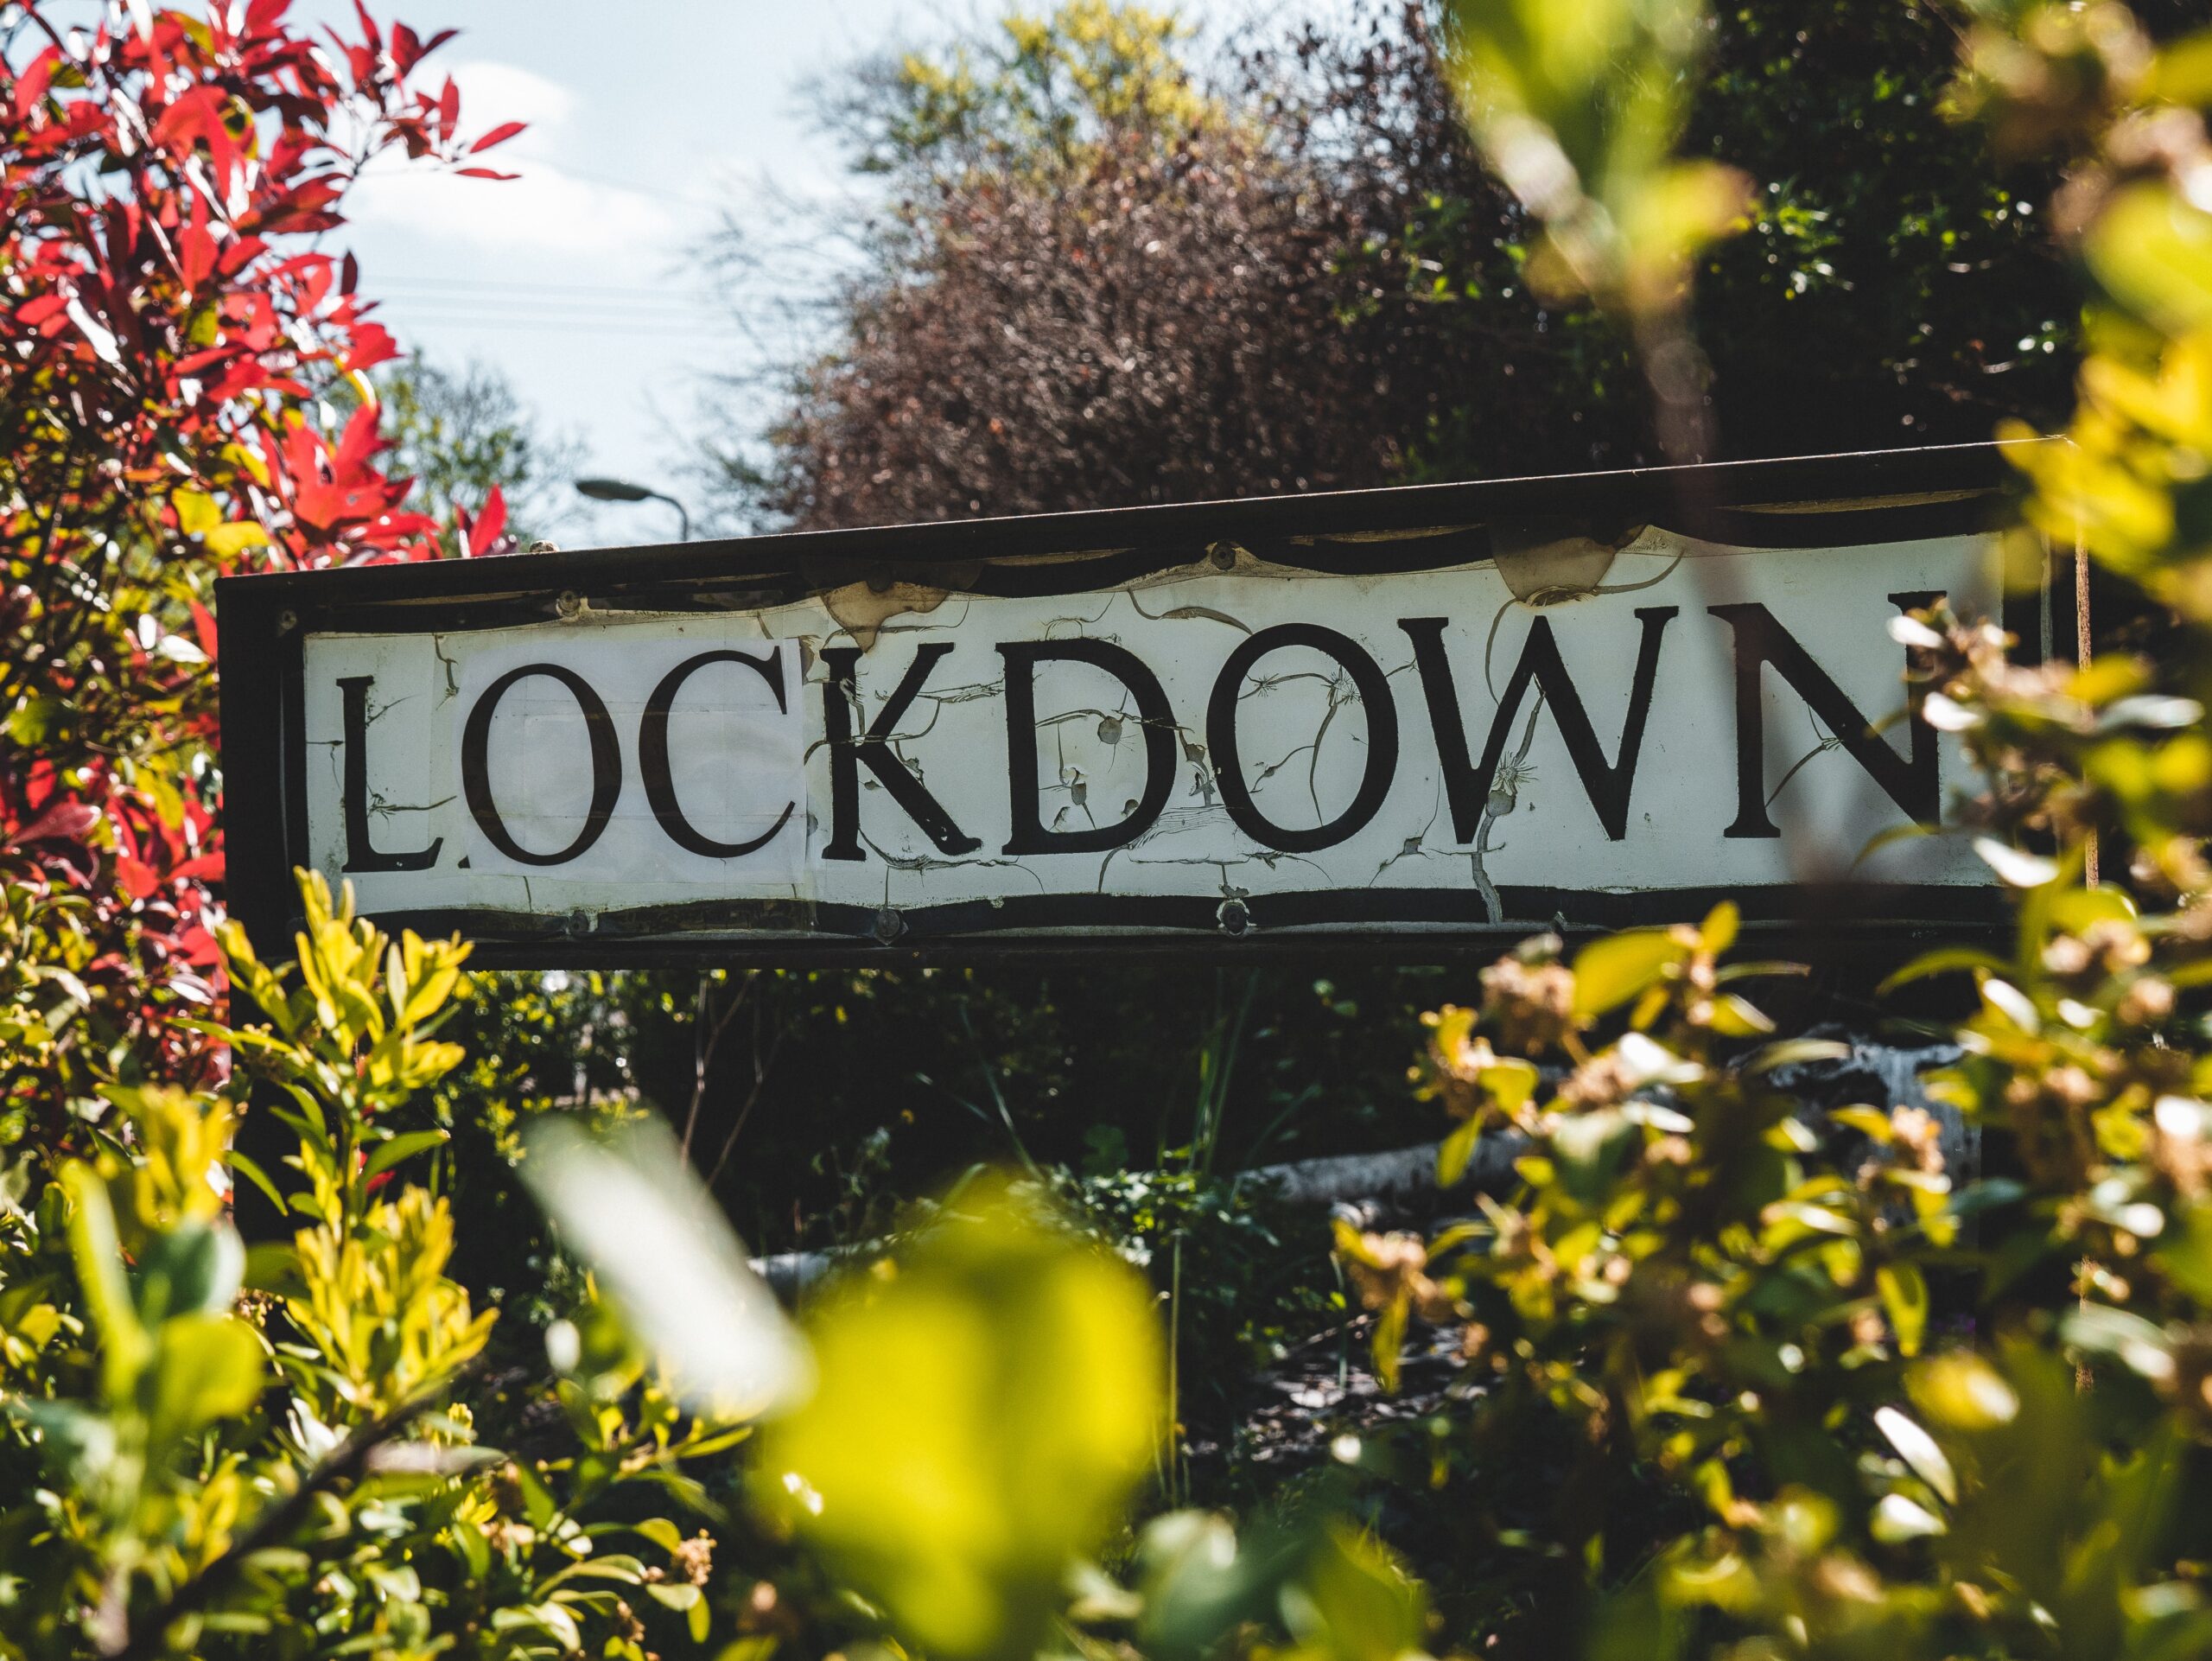 Lockdown Street Sign amid flowers